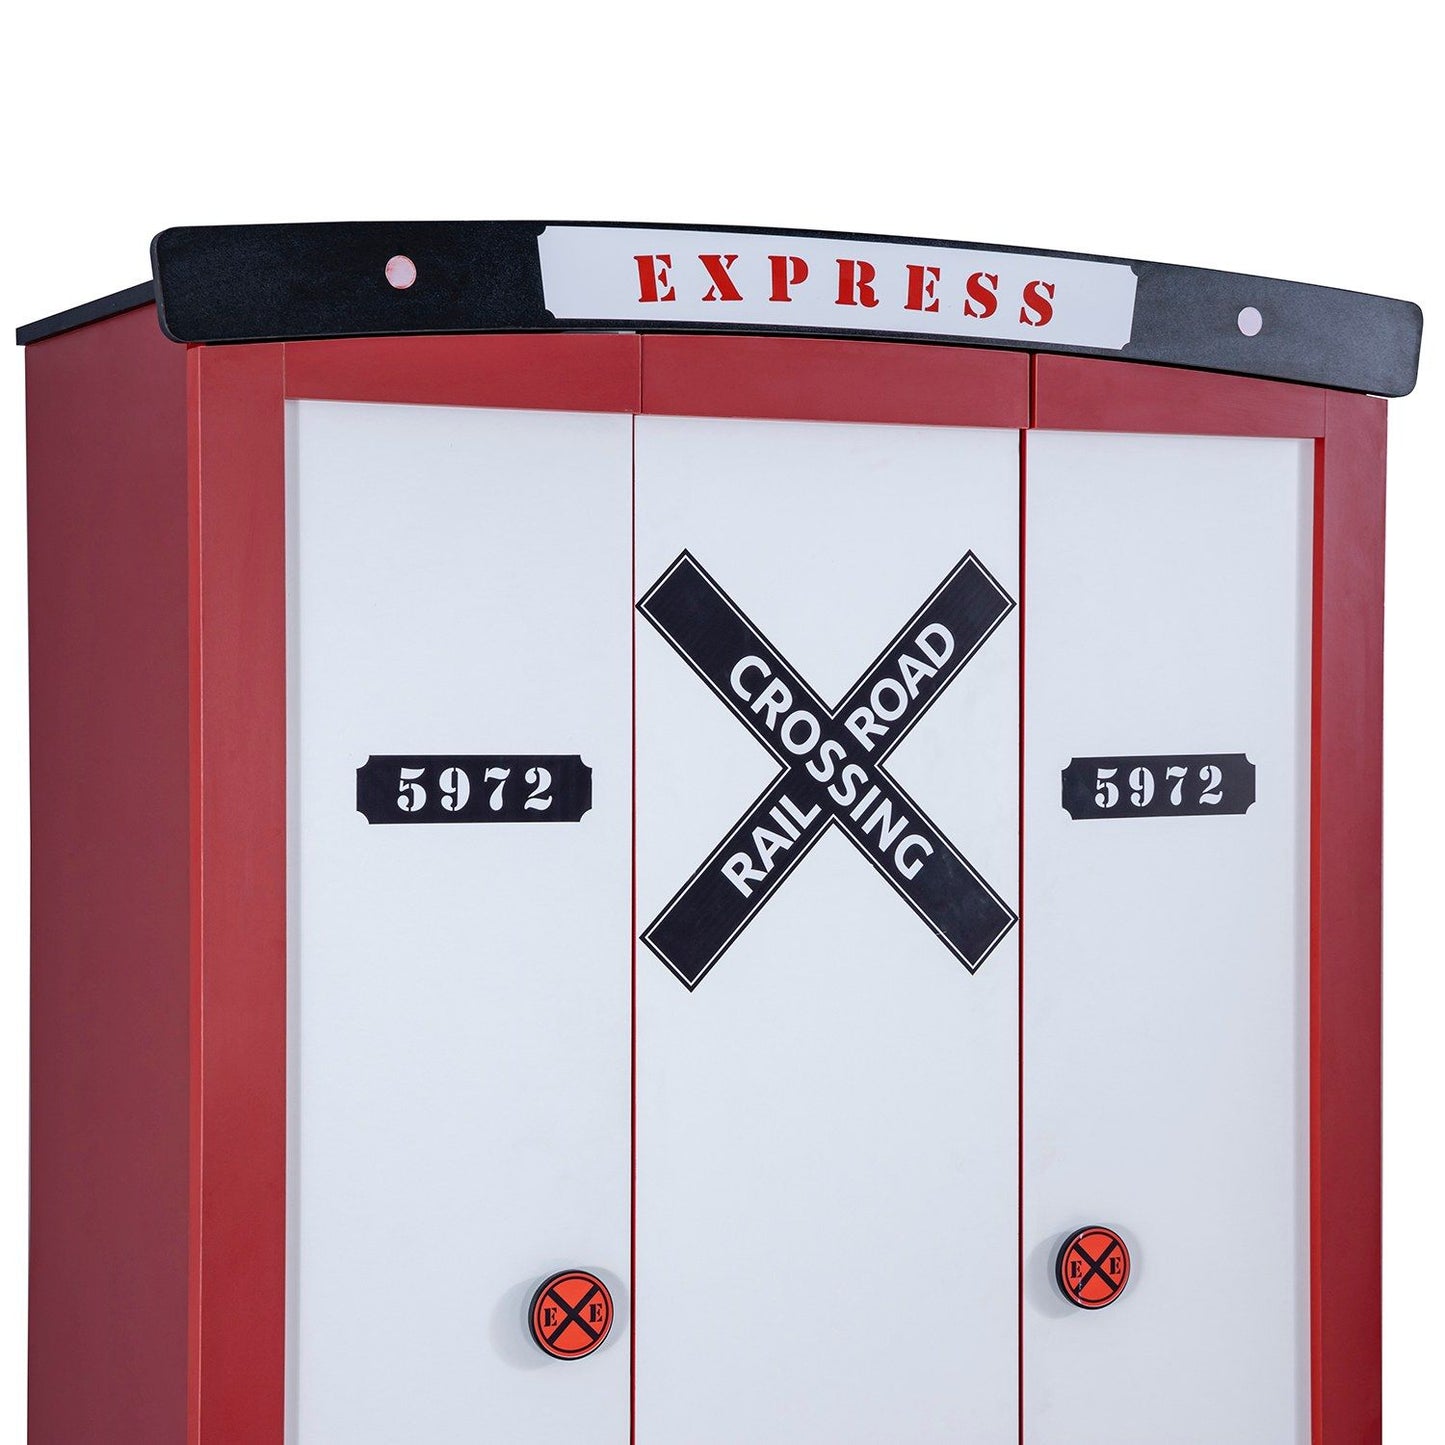 Express-3kd - Garderobe